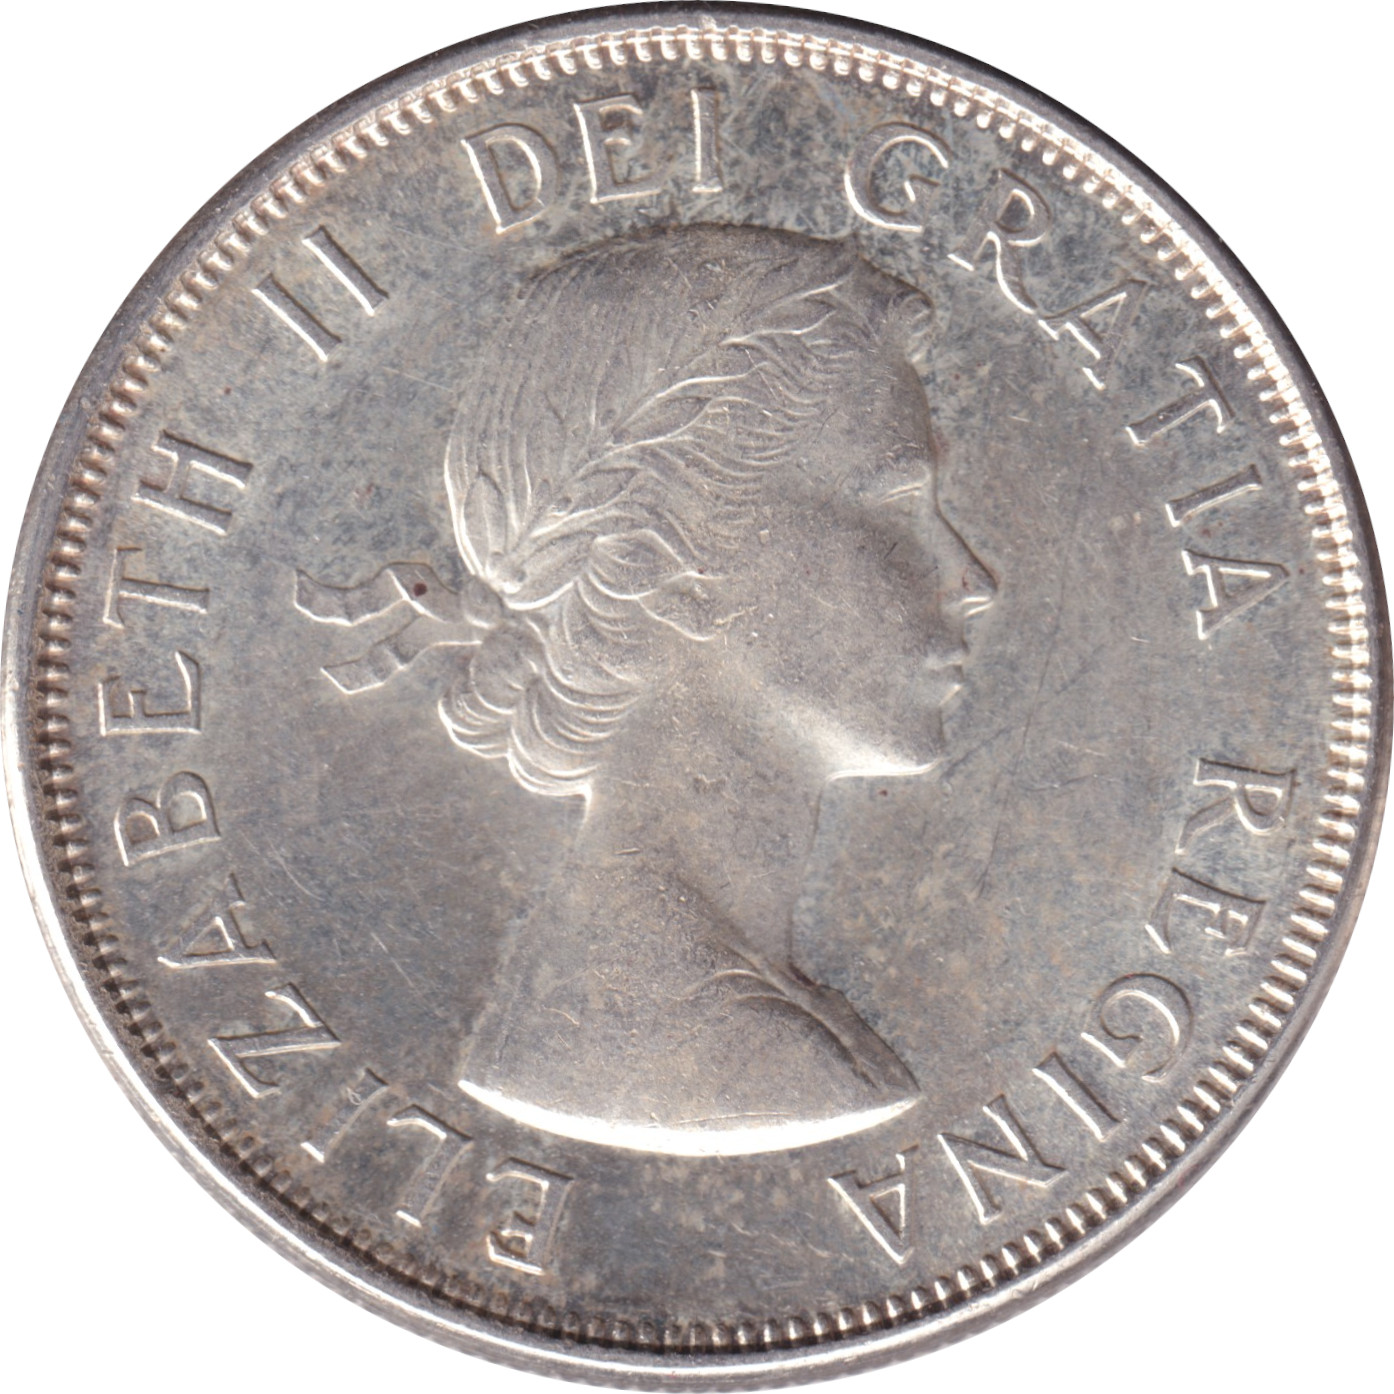 50 cents - Elizabeth II - Buste jeune - Petites armoiries